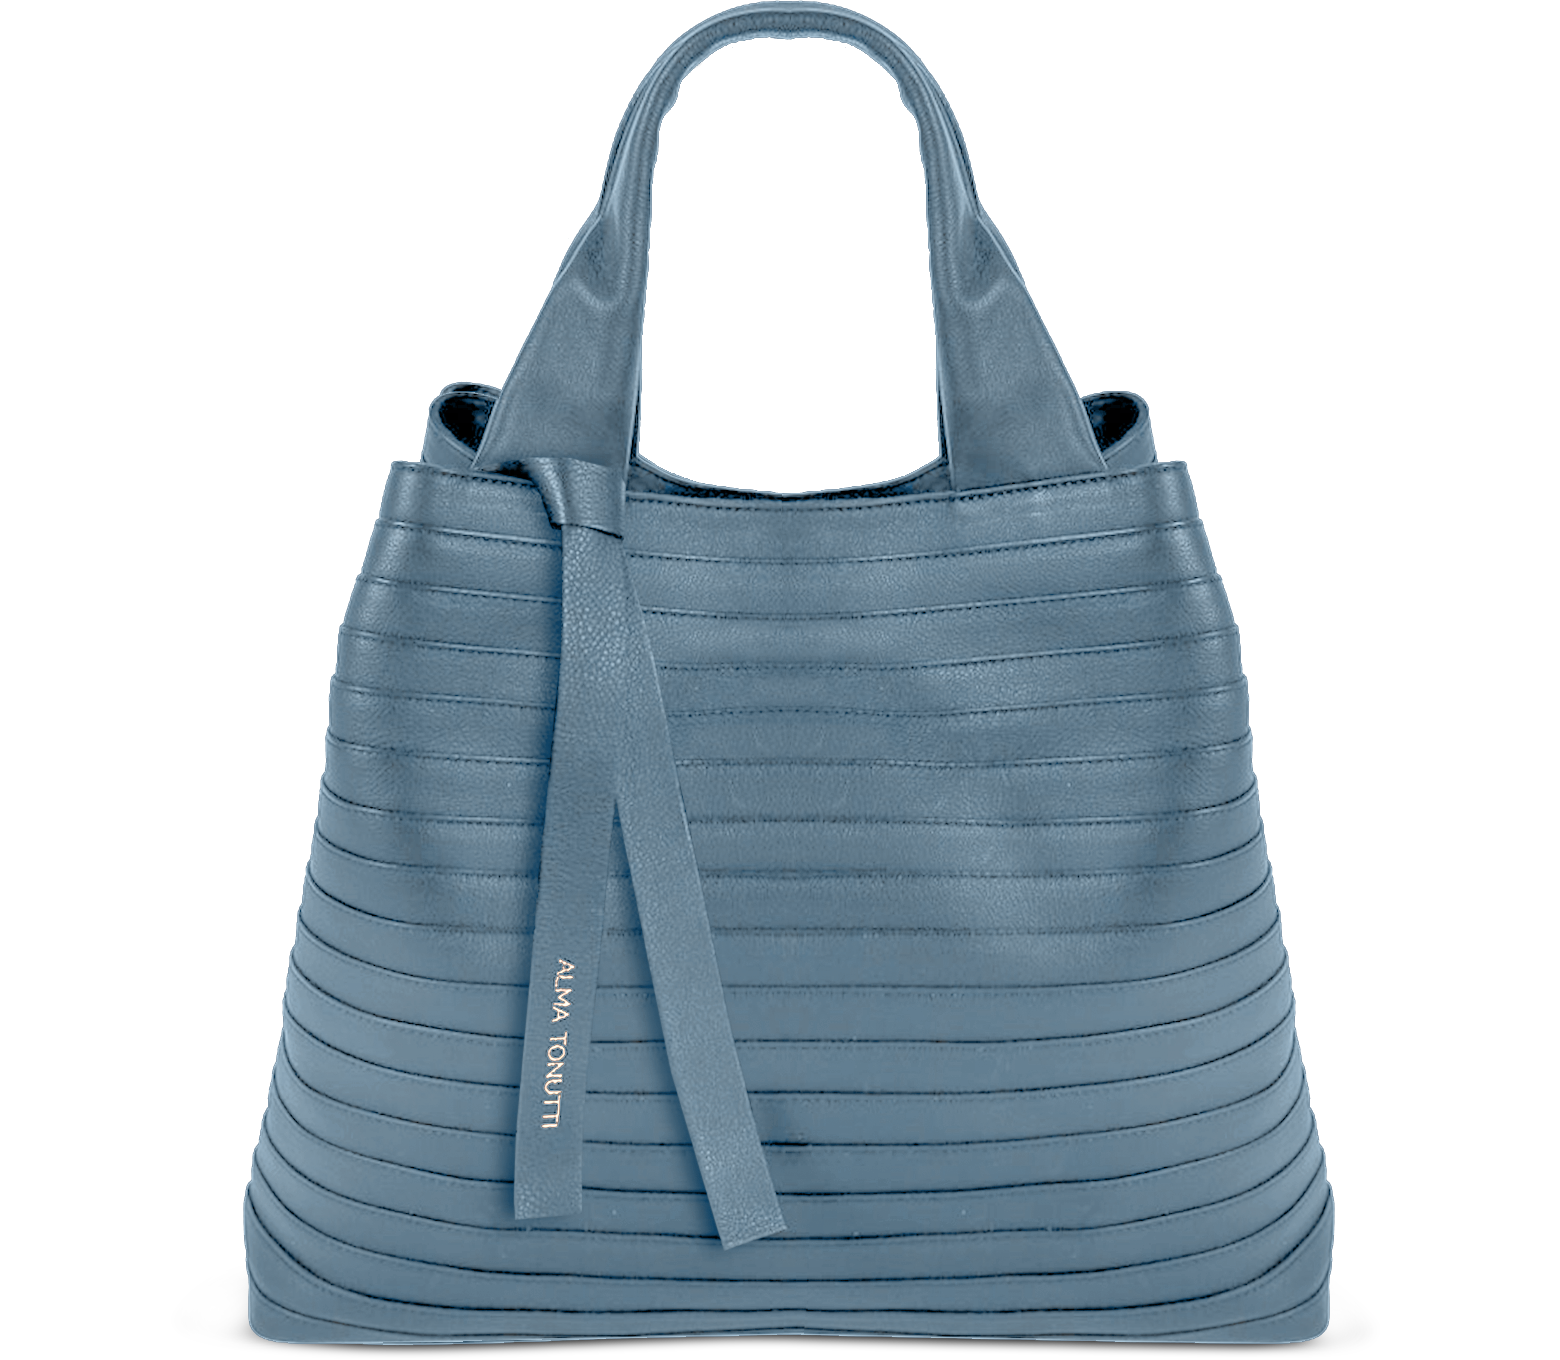 Alma Tonutti 5229 - Top Handle Bag at FORZIERI